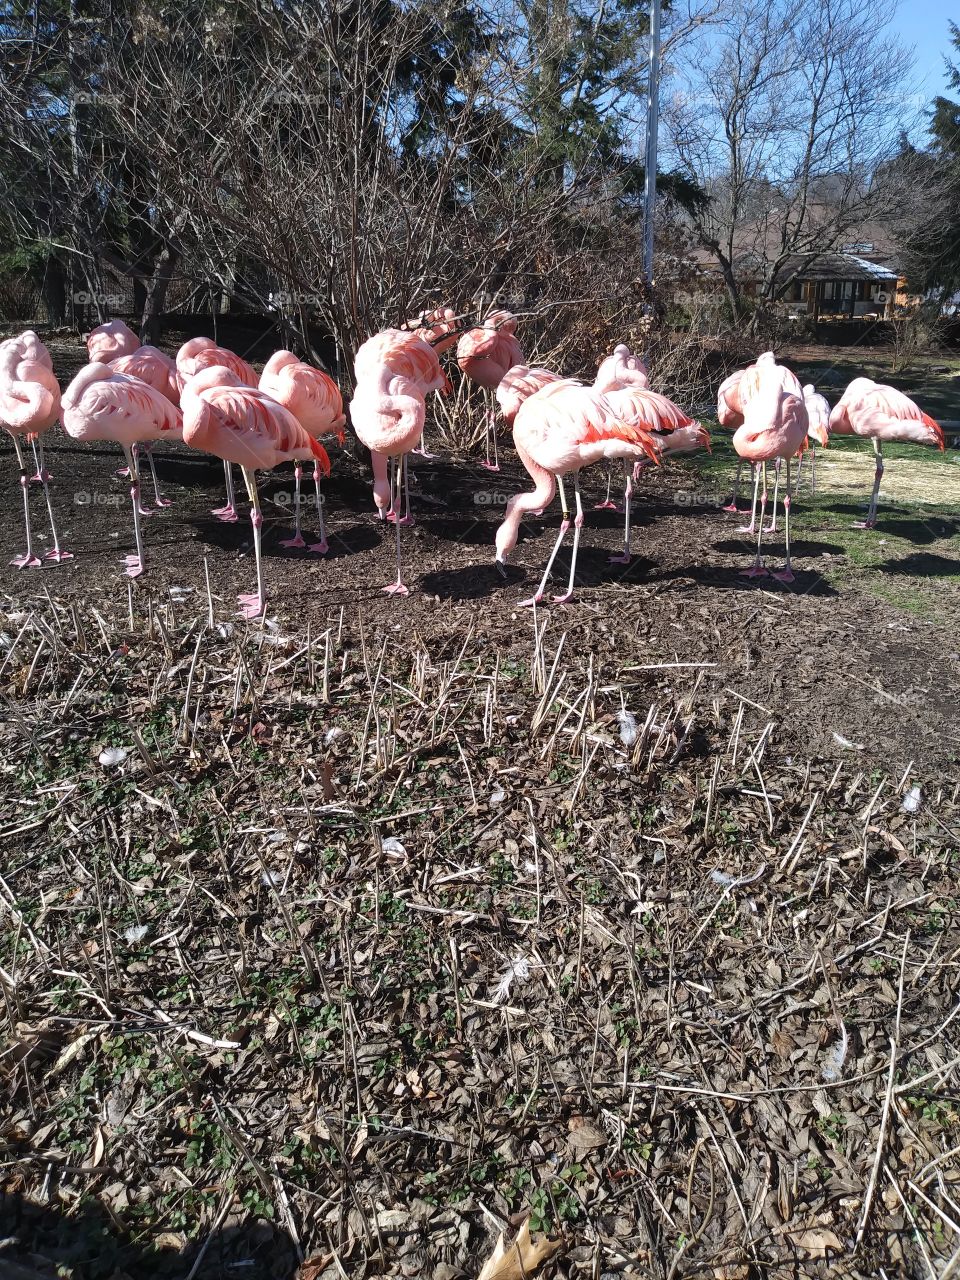 just flamingos